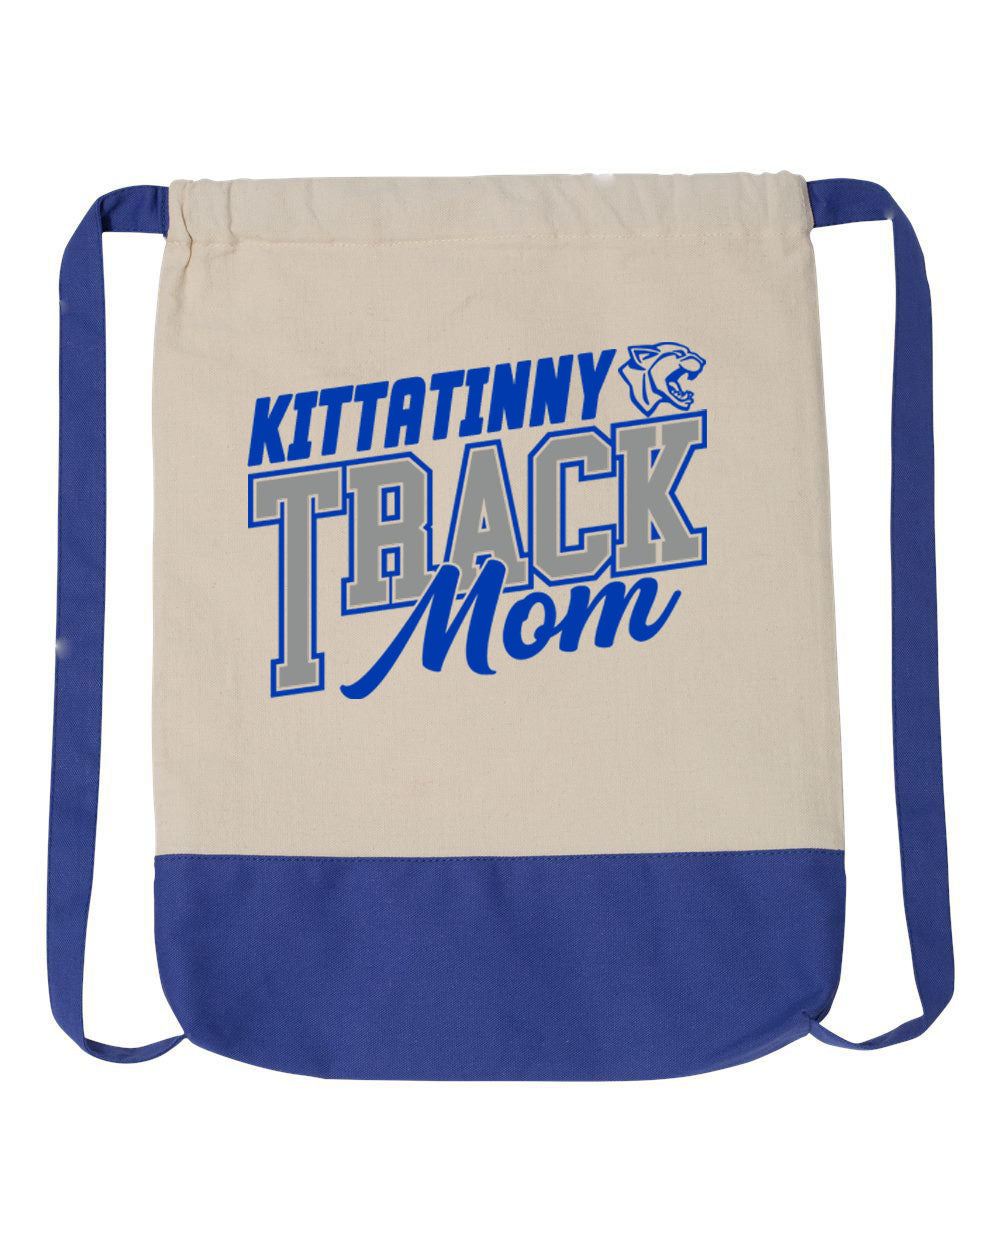 Kittatinny Track design 4 Drawstring Bag